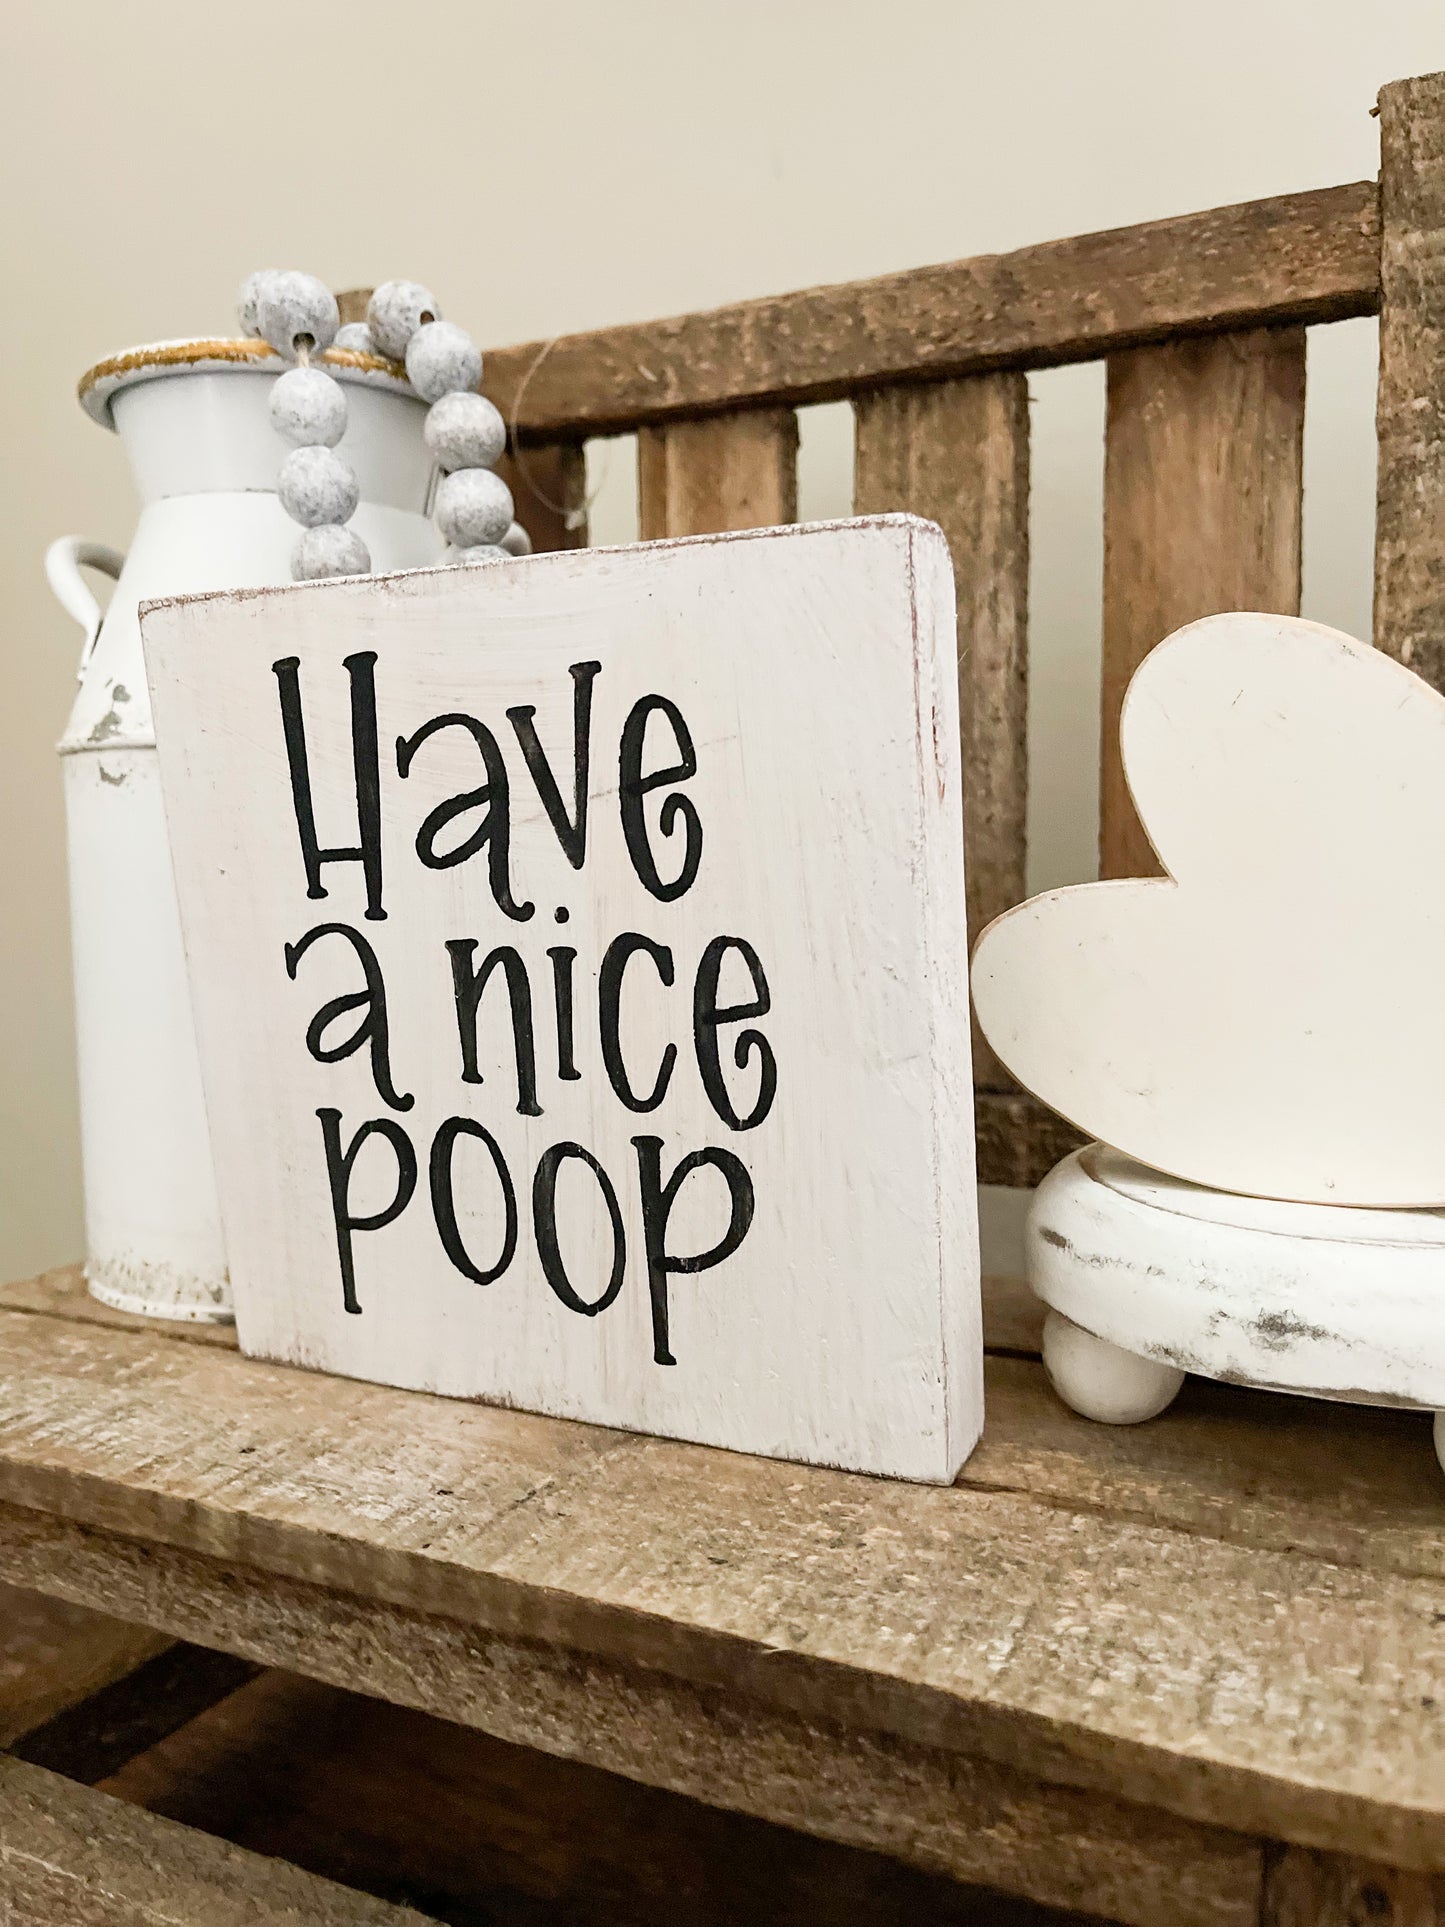 Have a nice poop sign